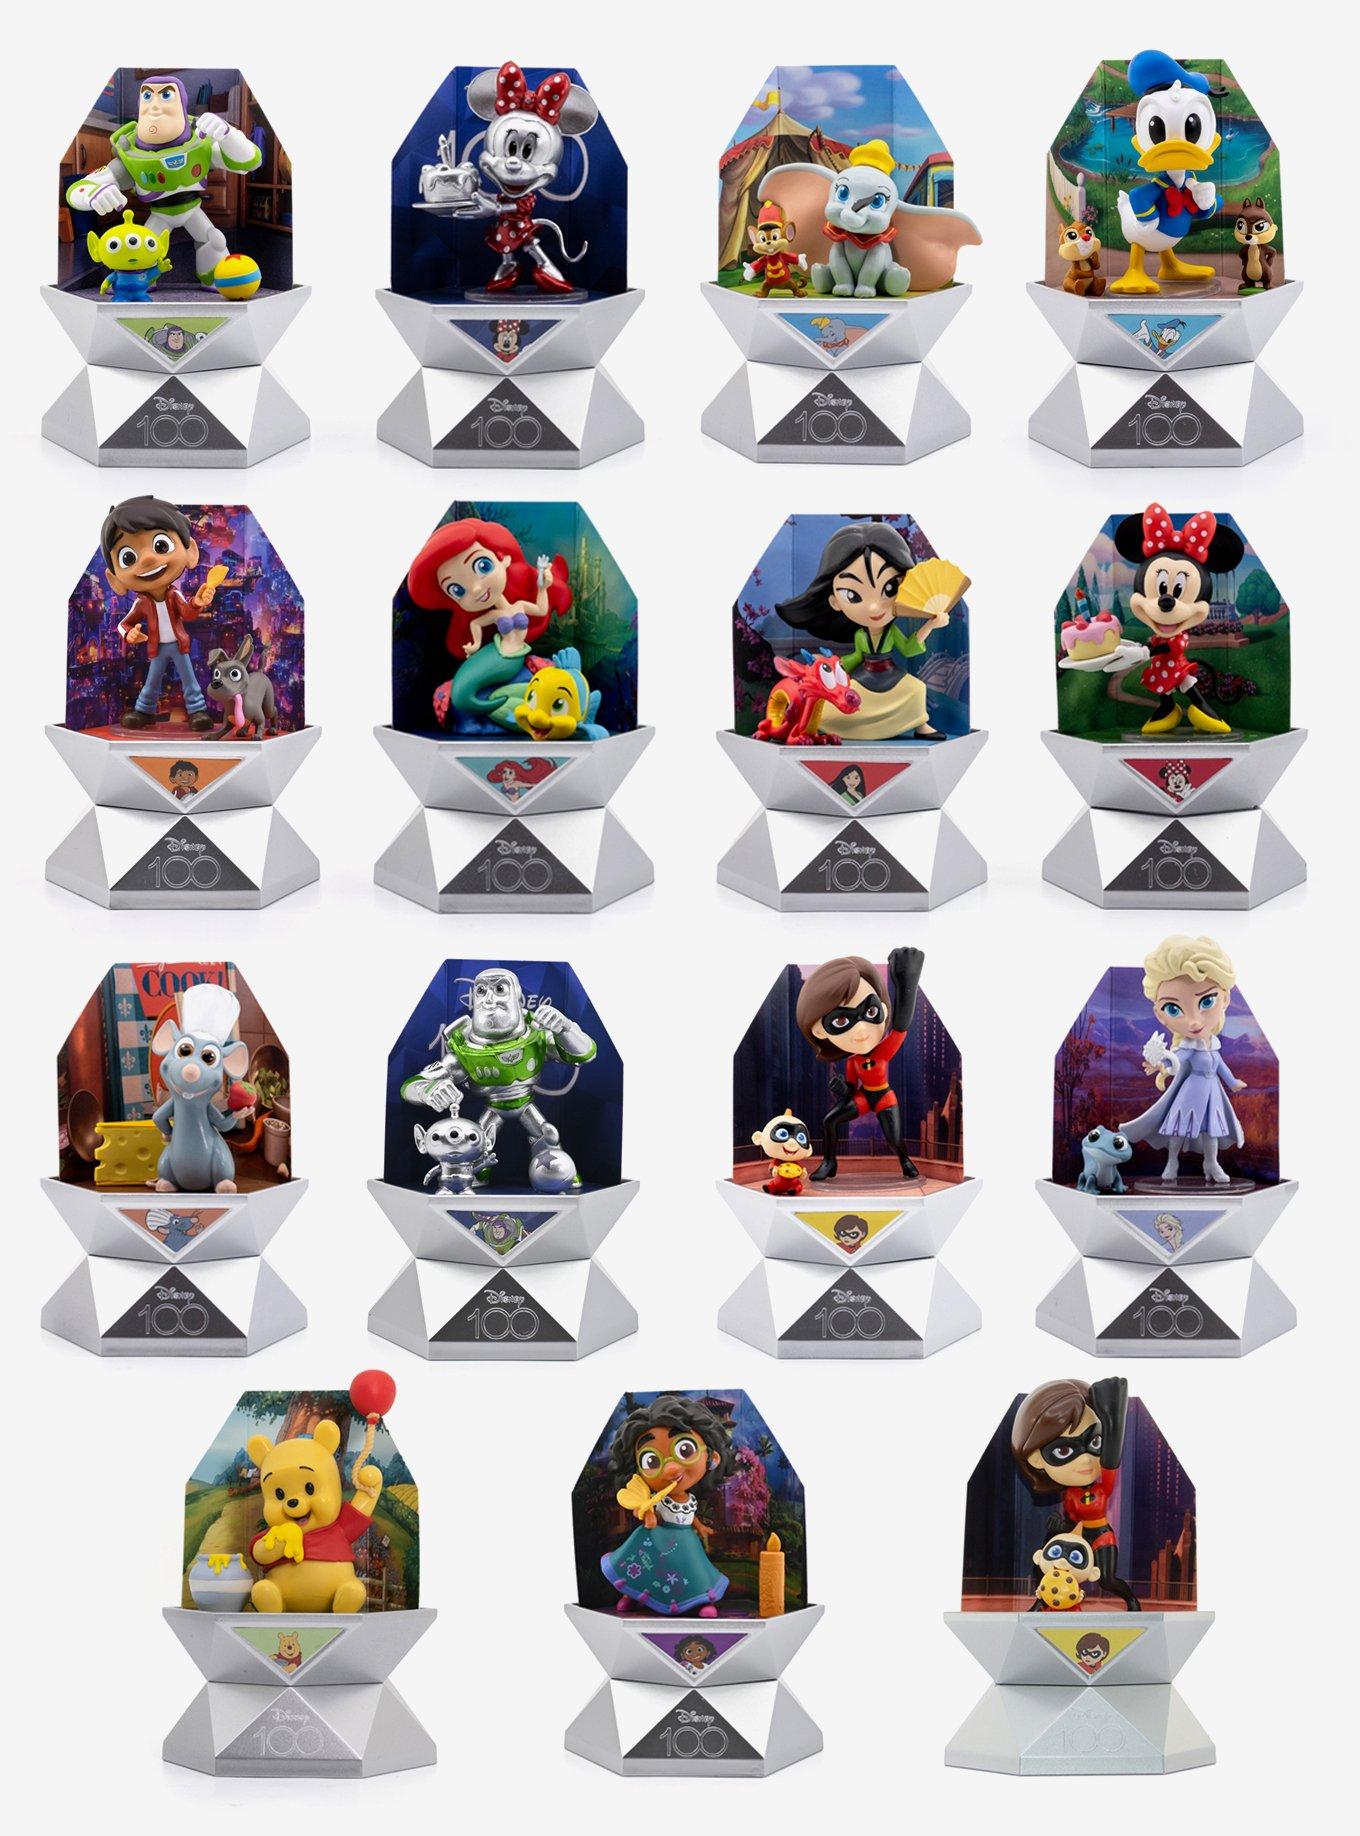 Disney 100 Surprise Capsules Series 2 - Dual Pack – YuMe Toys